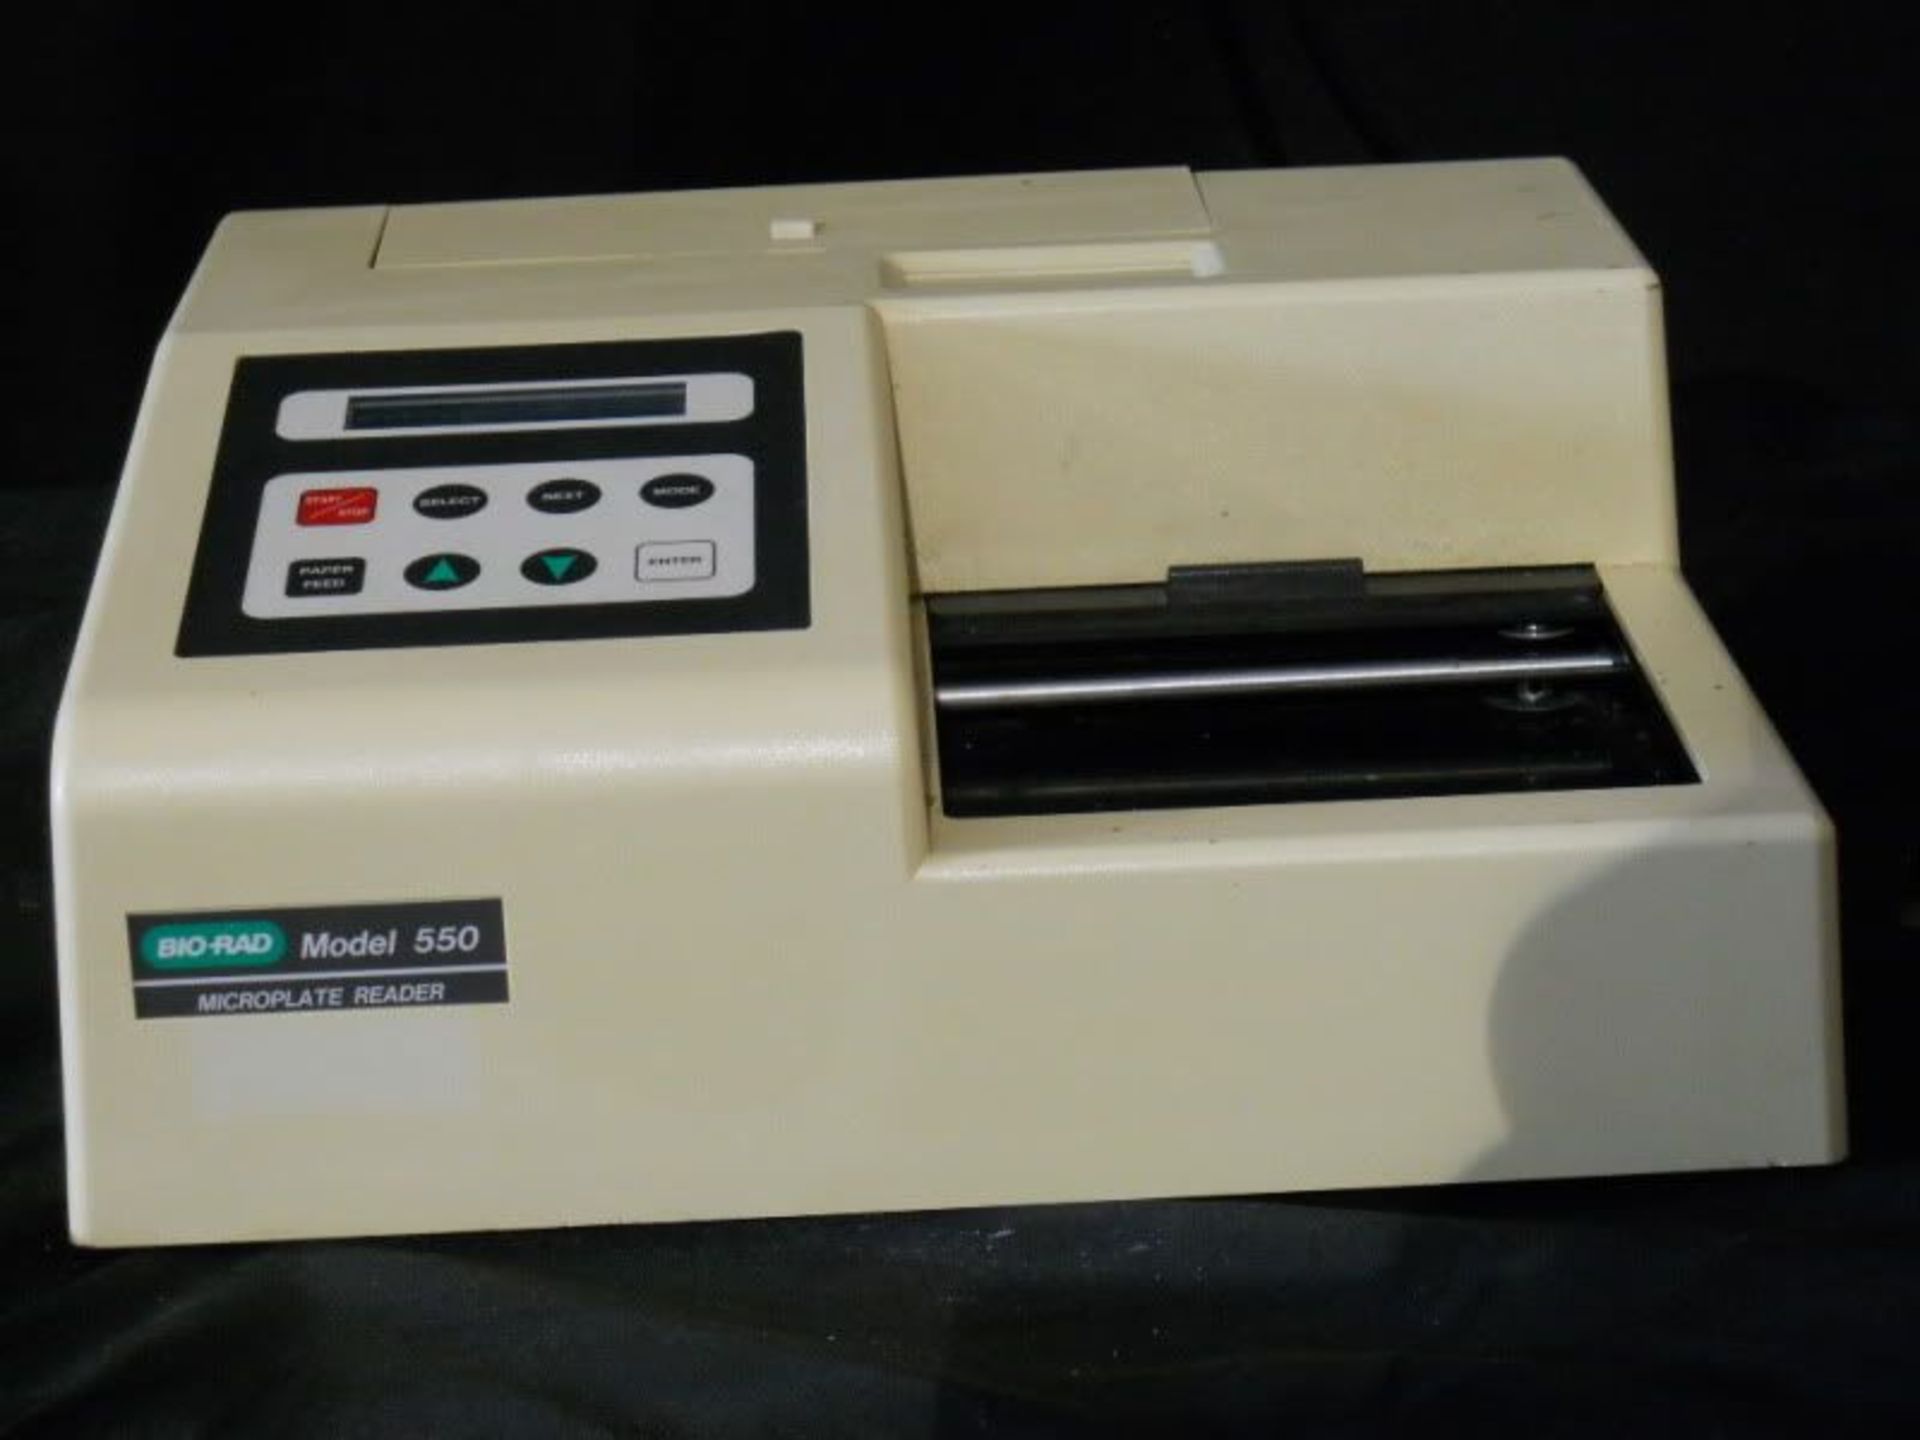 Bio Rad Microplate Reader Model 550 (Parts), Qty 1, 330812933938